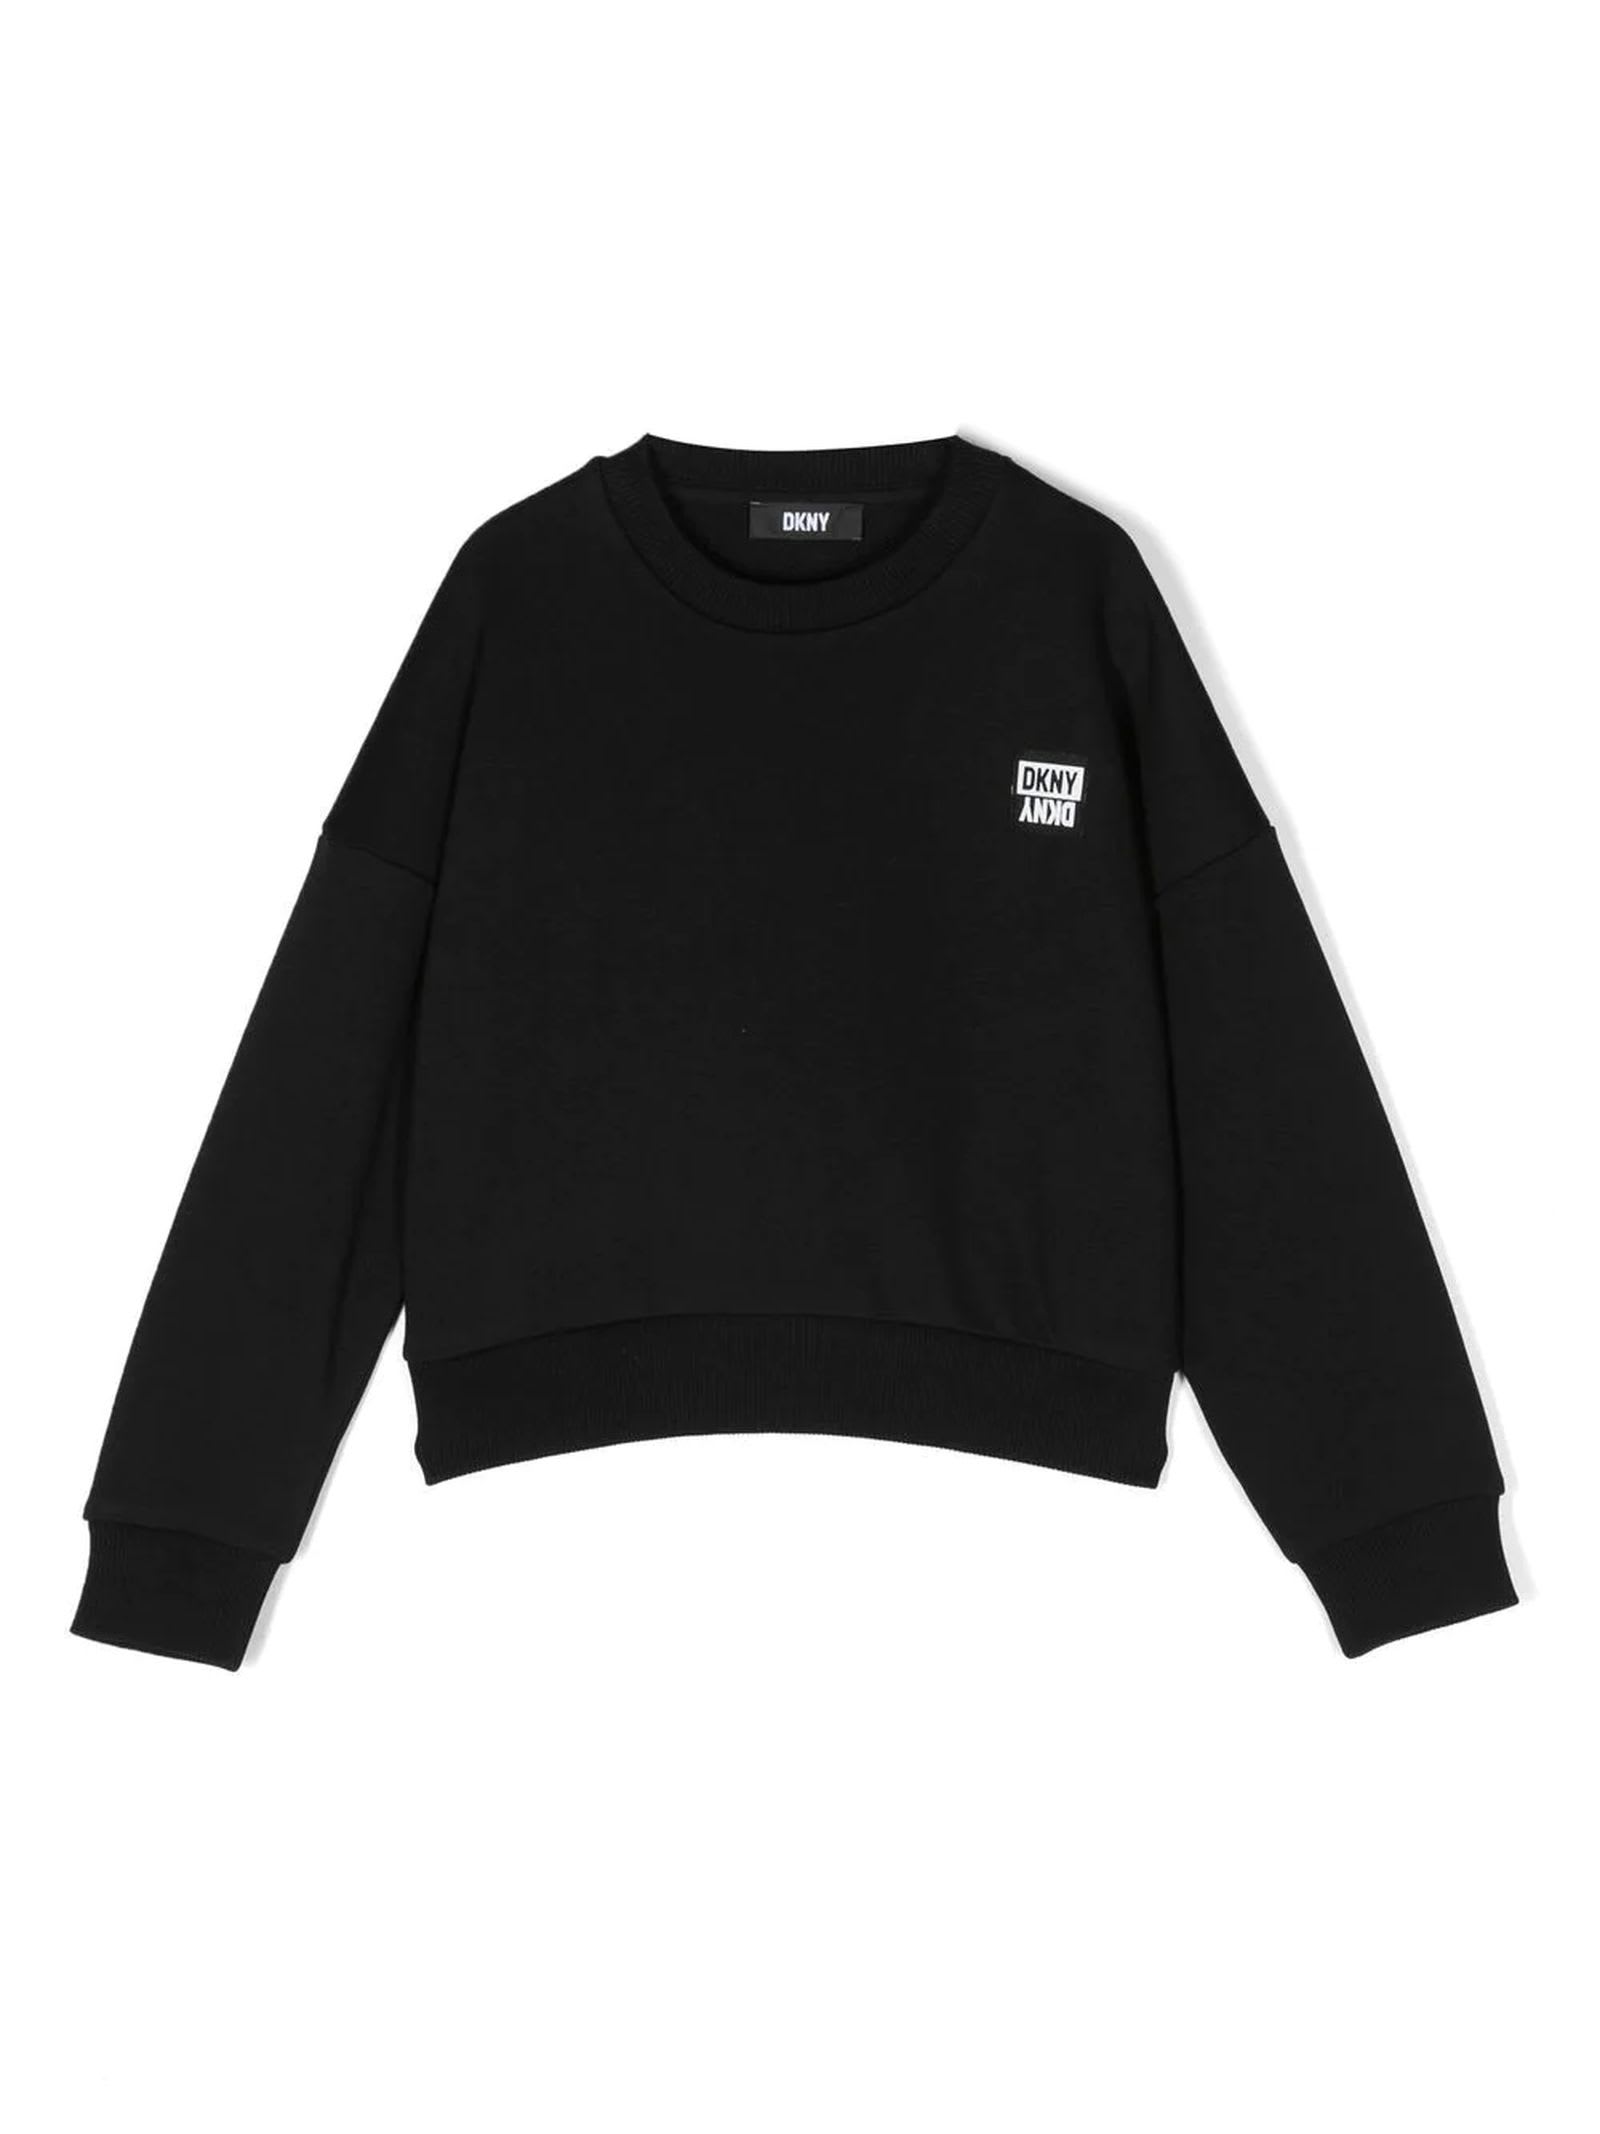 DKNY Black Cotton Sweatshirt